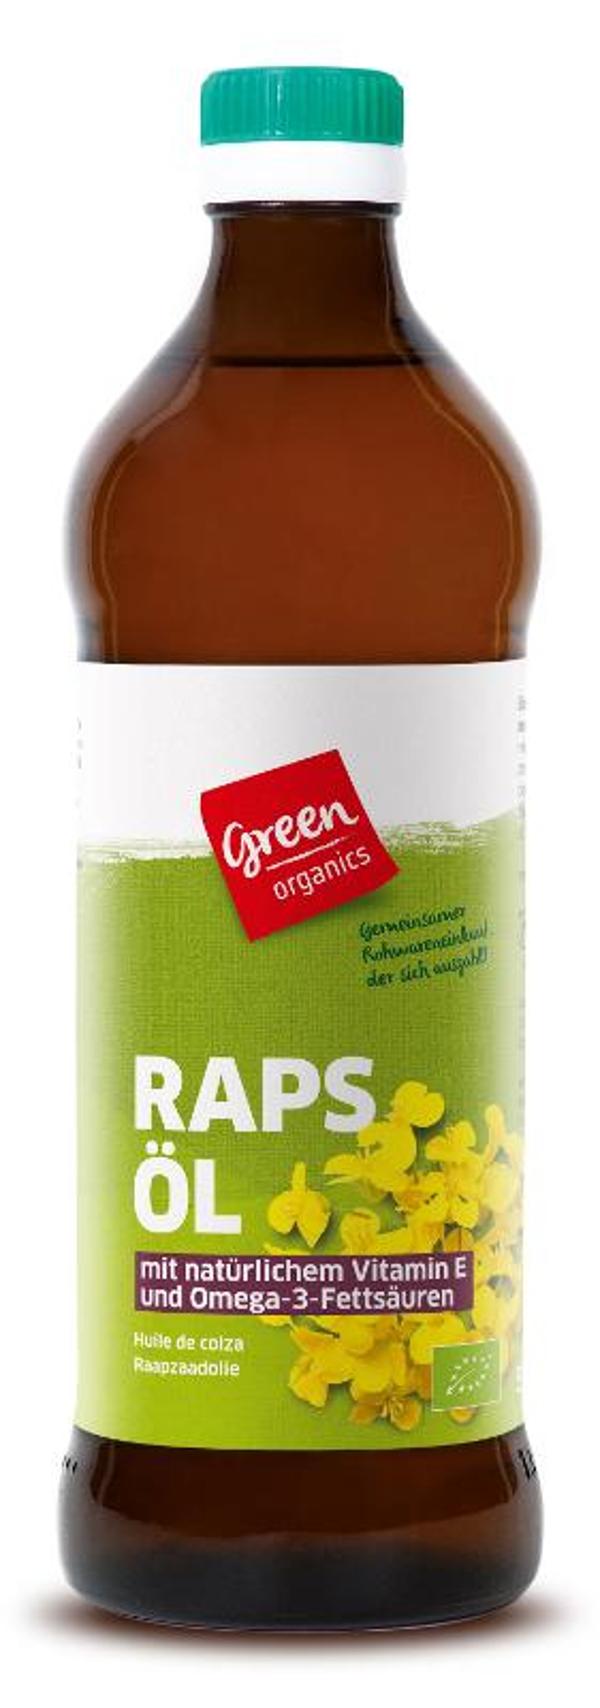 Produktfoto zu green Rapskern-Öl kaltgepresst